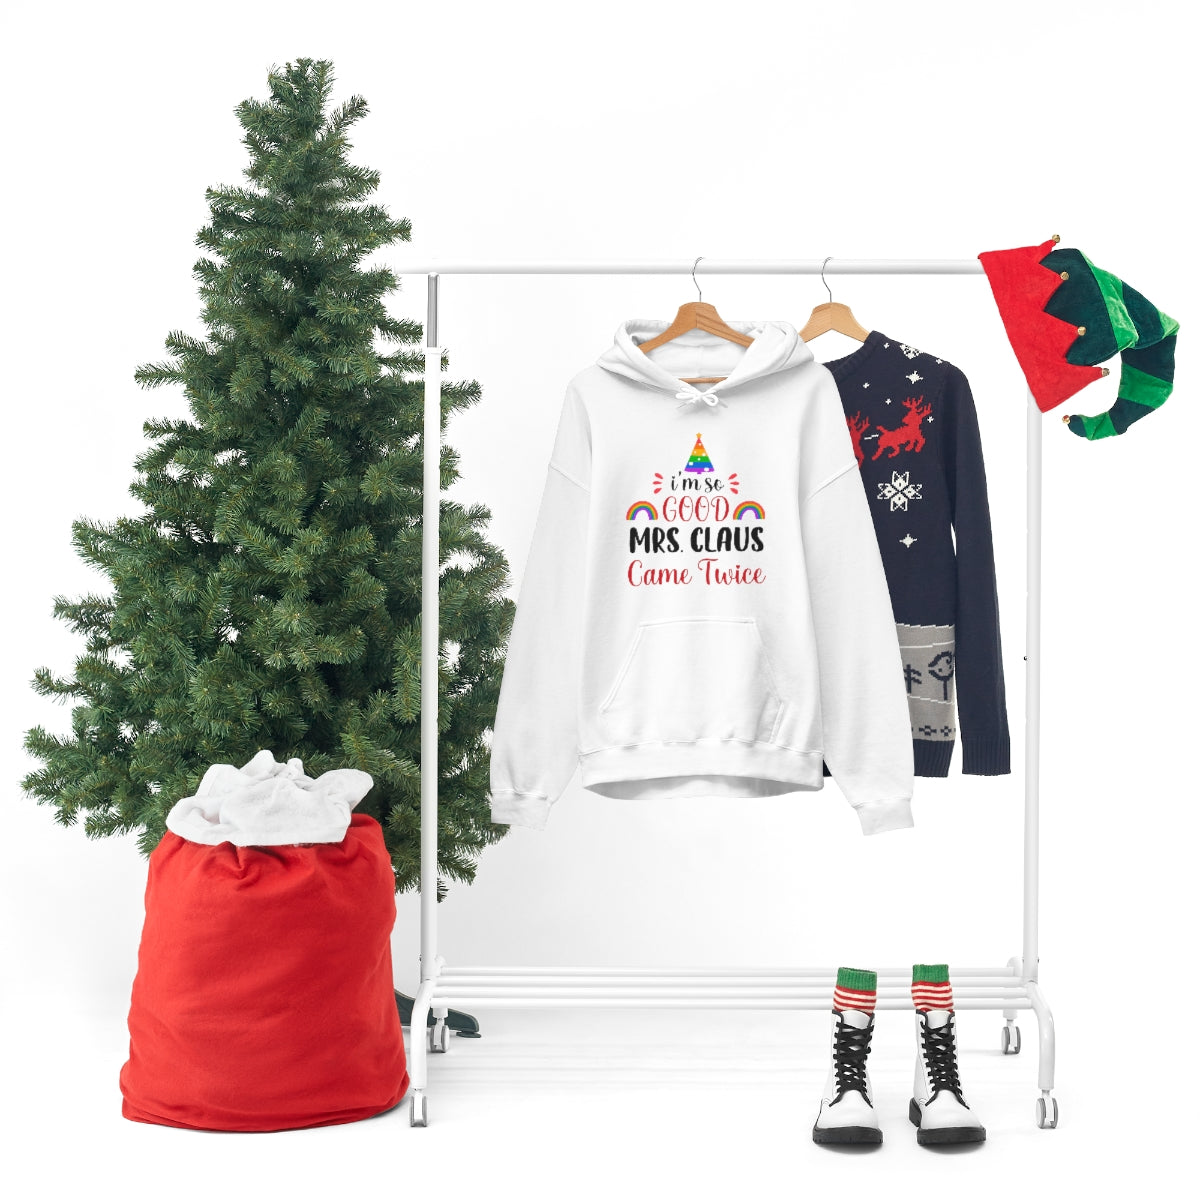 Unisex Christmas LGBTQ Heavy Blend Hoodie - I’M So Good Mrs. Claus Came Twice Printify